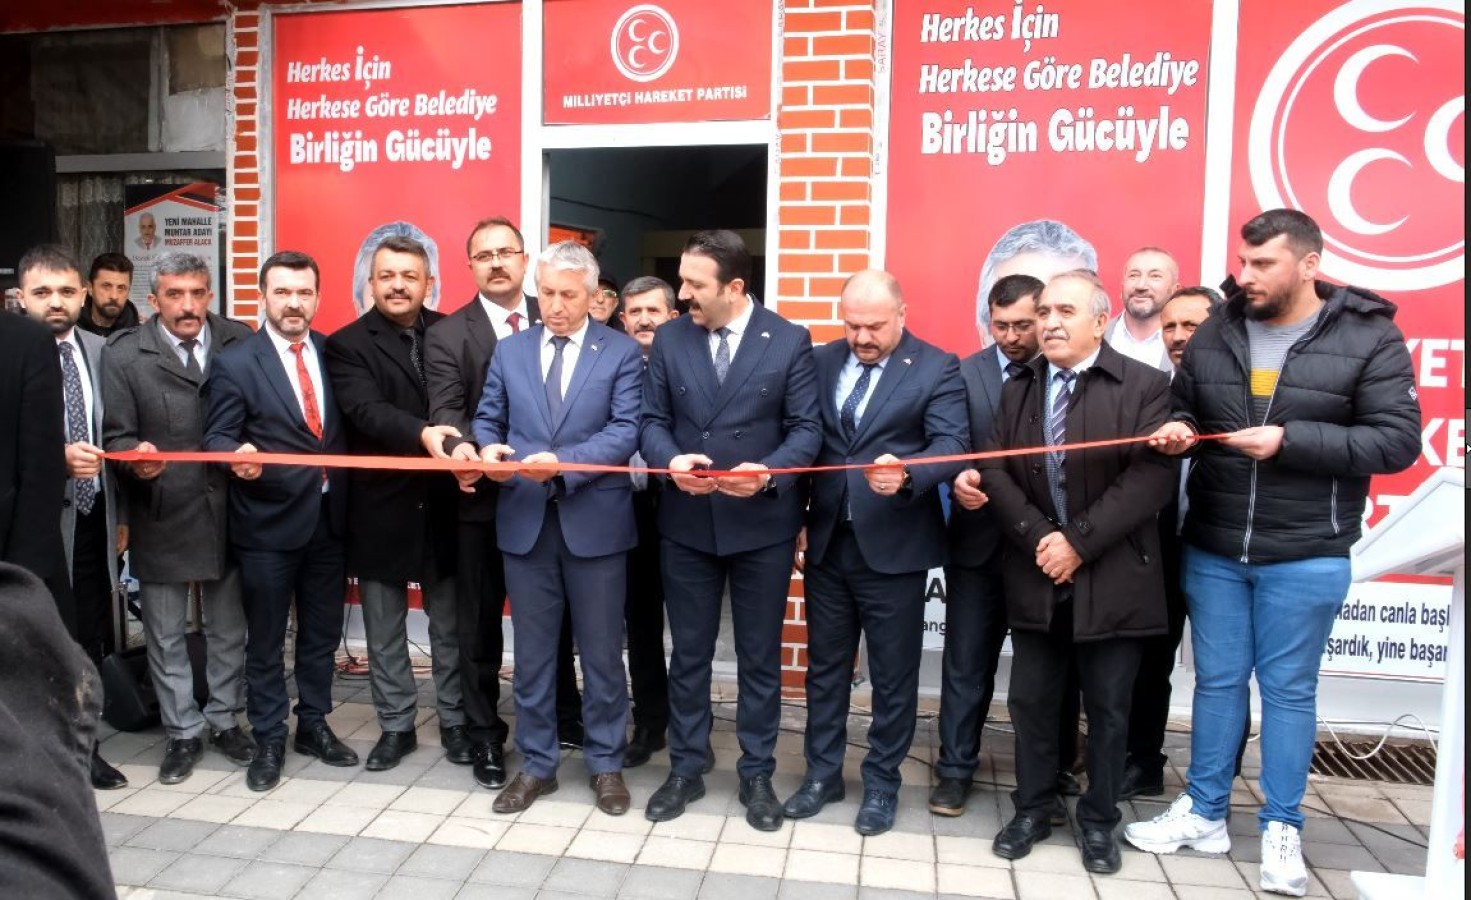 İhsangazi’de MHP’nin seçim bürosu açıldı!;